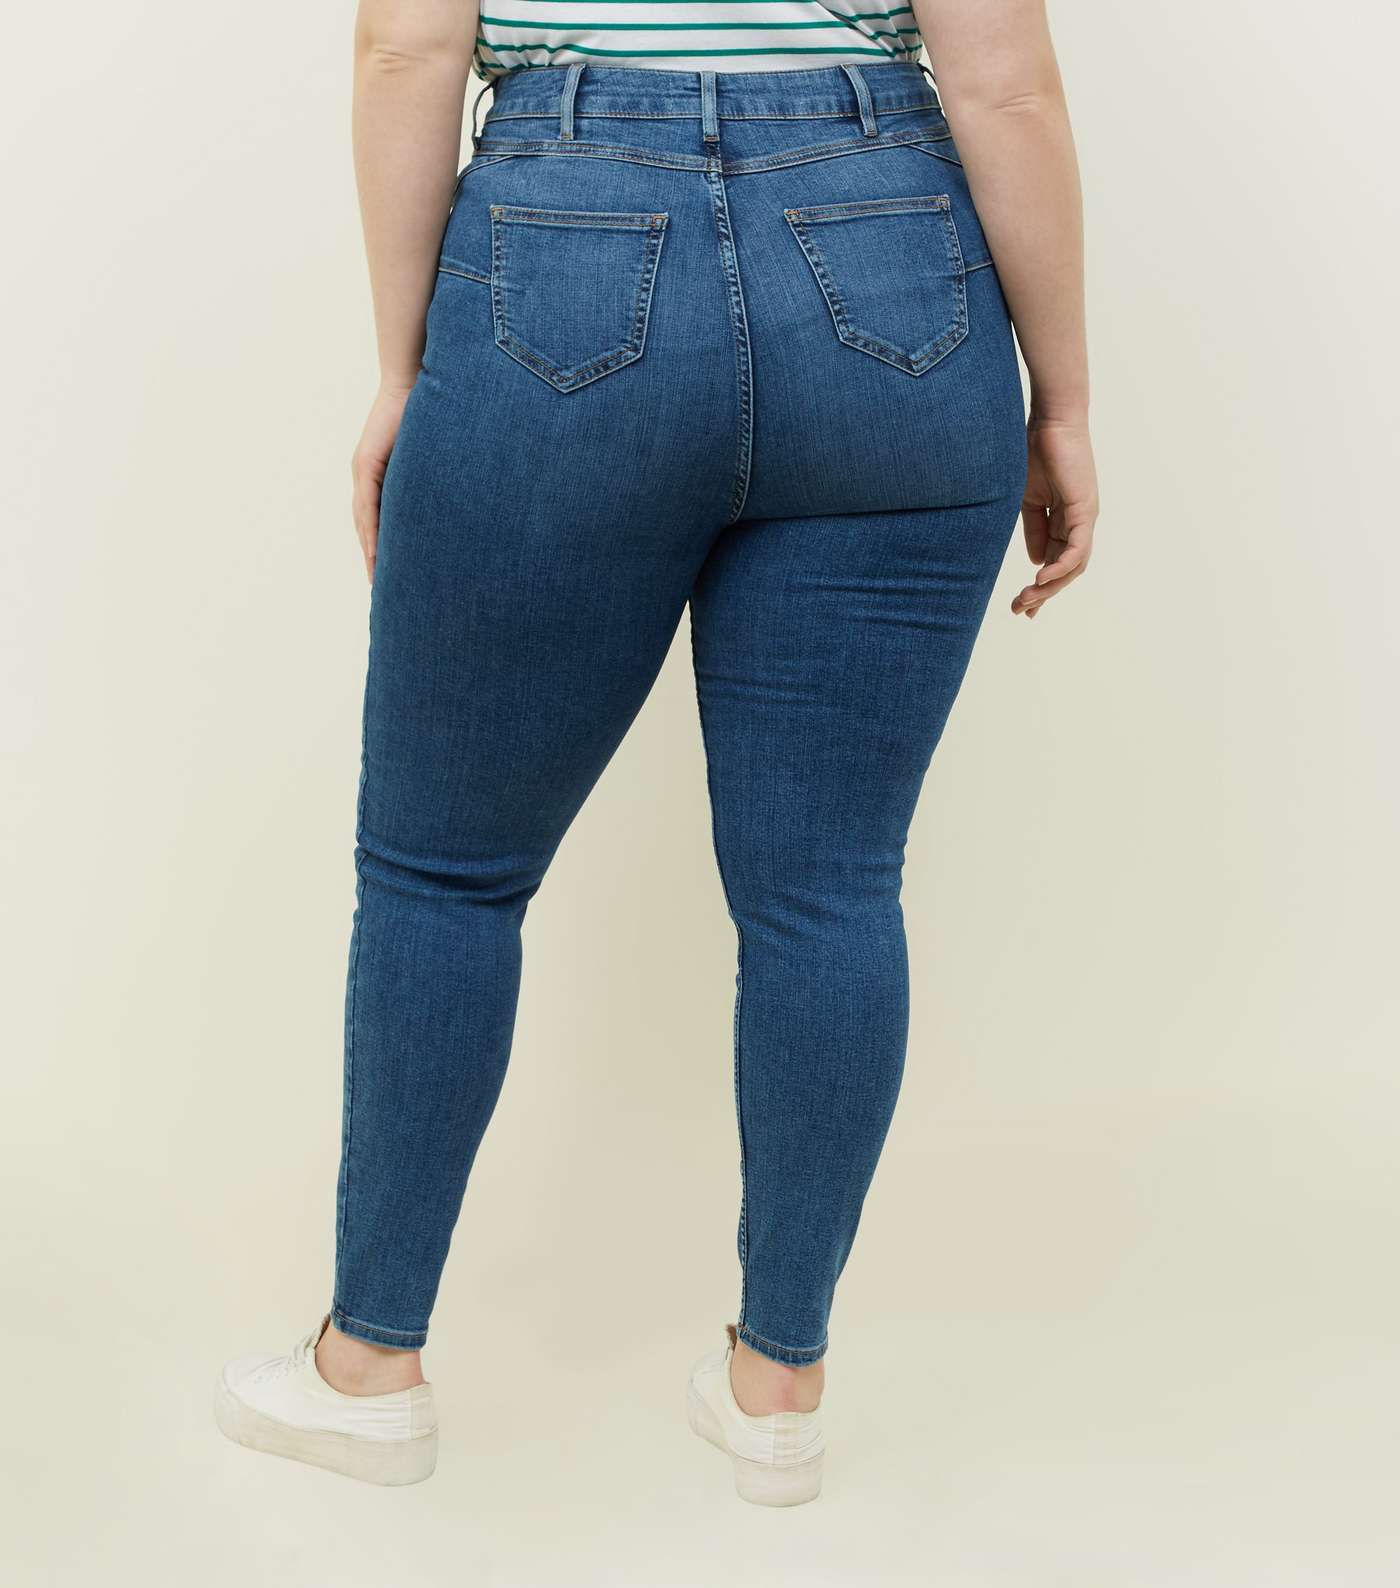 Curves Blue 'Lift & Shape' Jenna Skinny Jeans Image 3